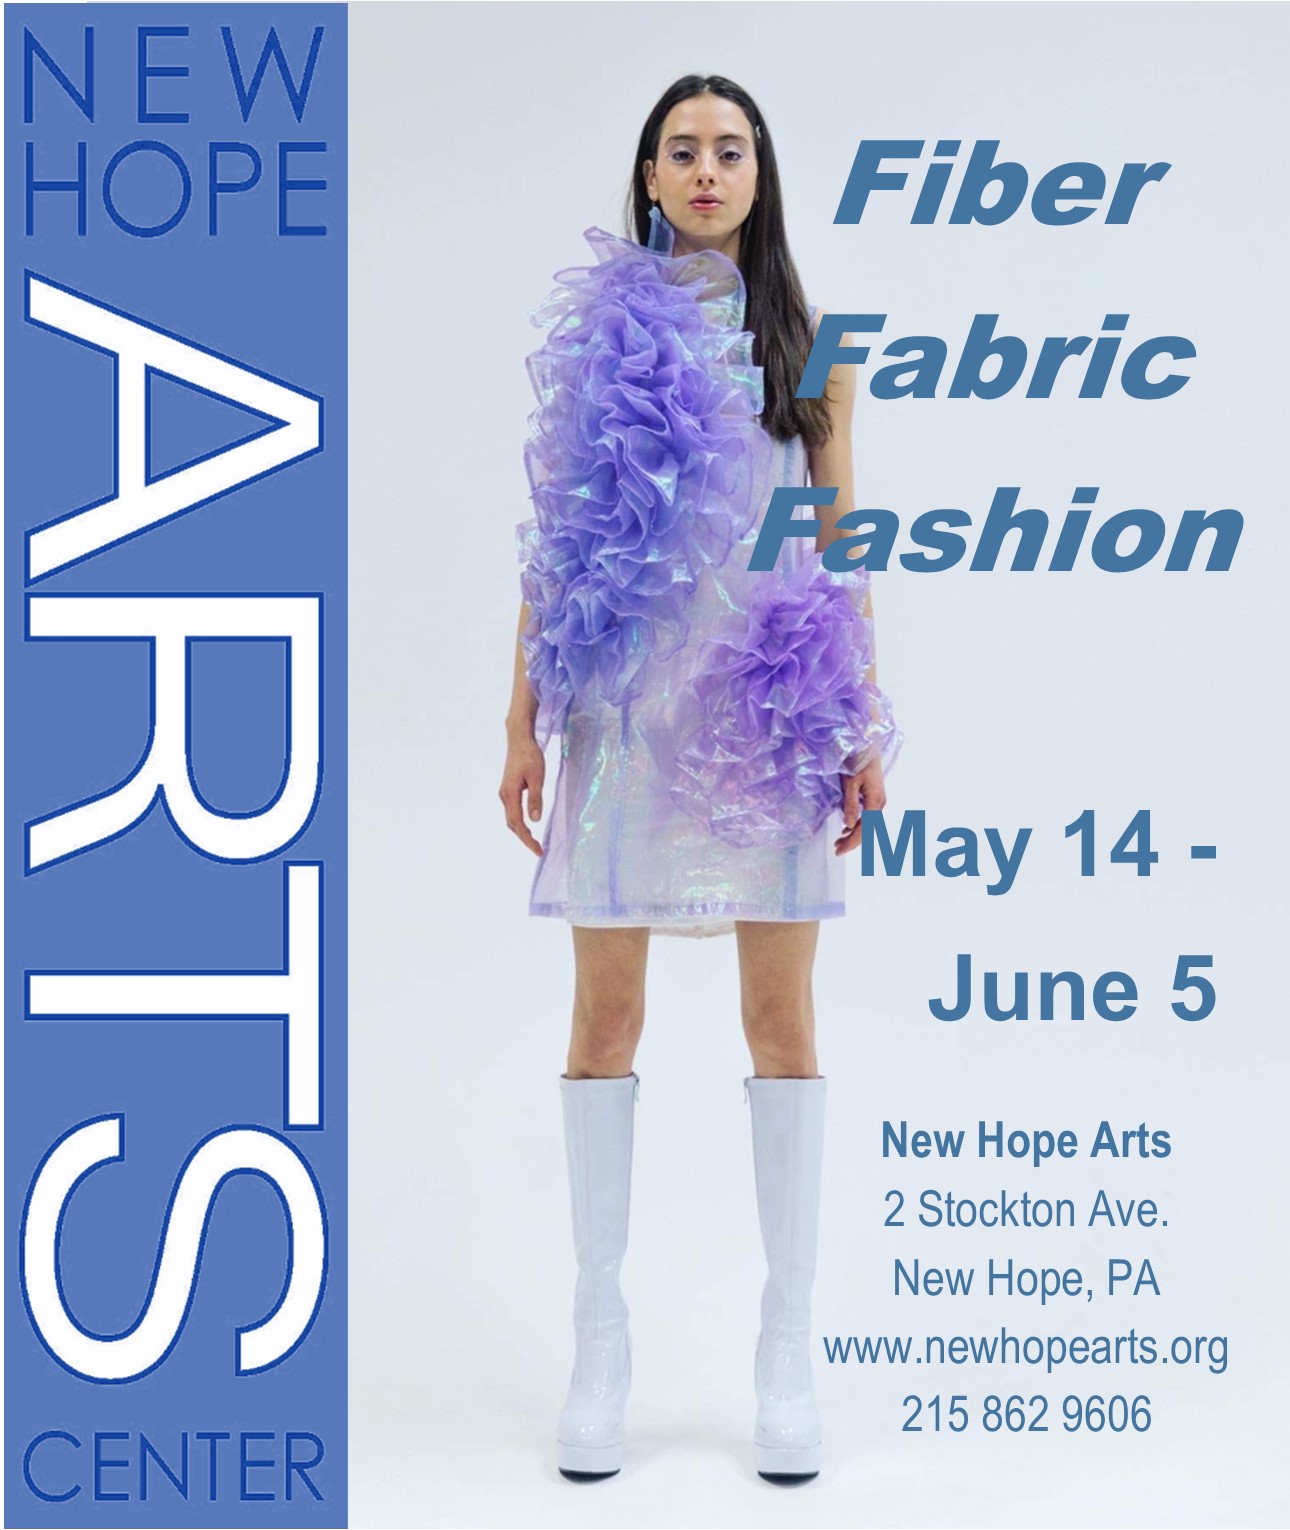 Fiber, Fabric, Fashion Returns at Last!